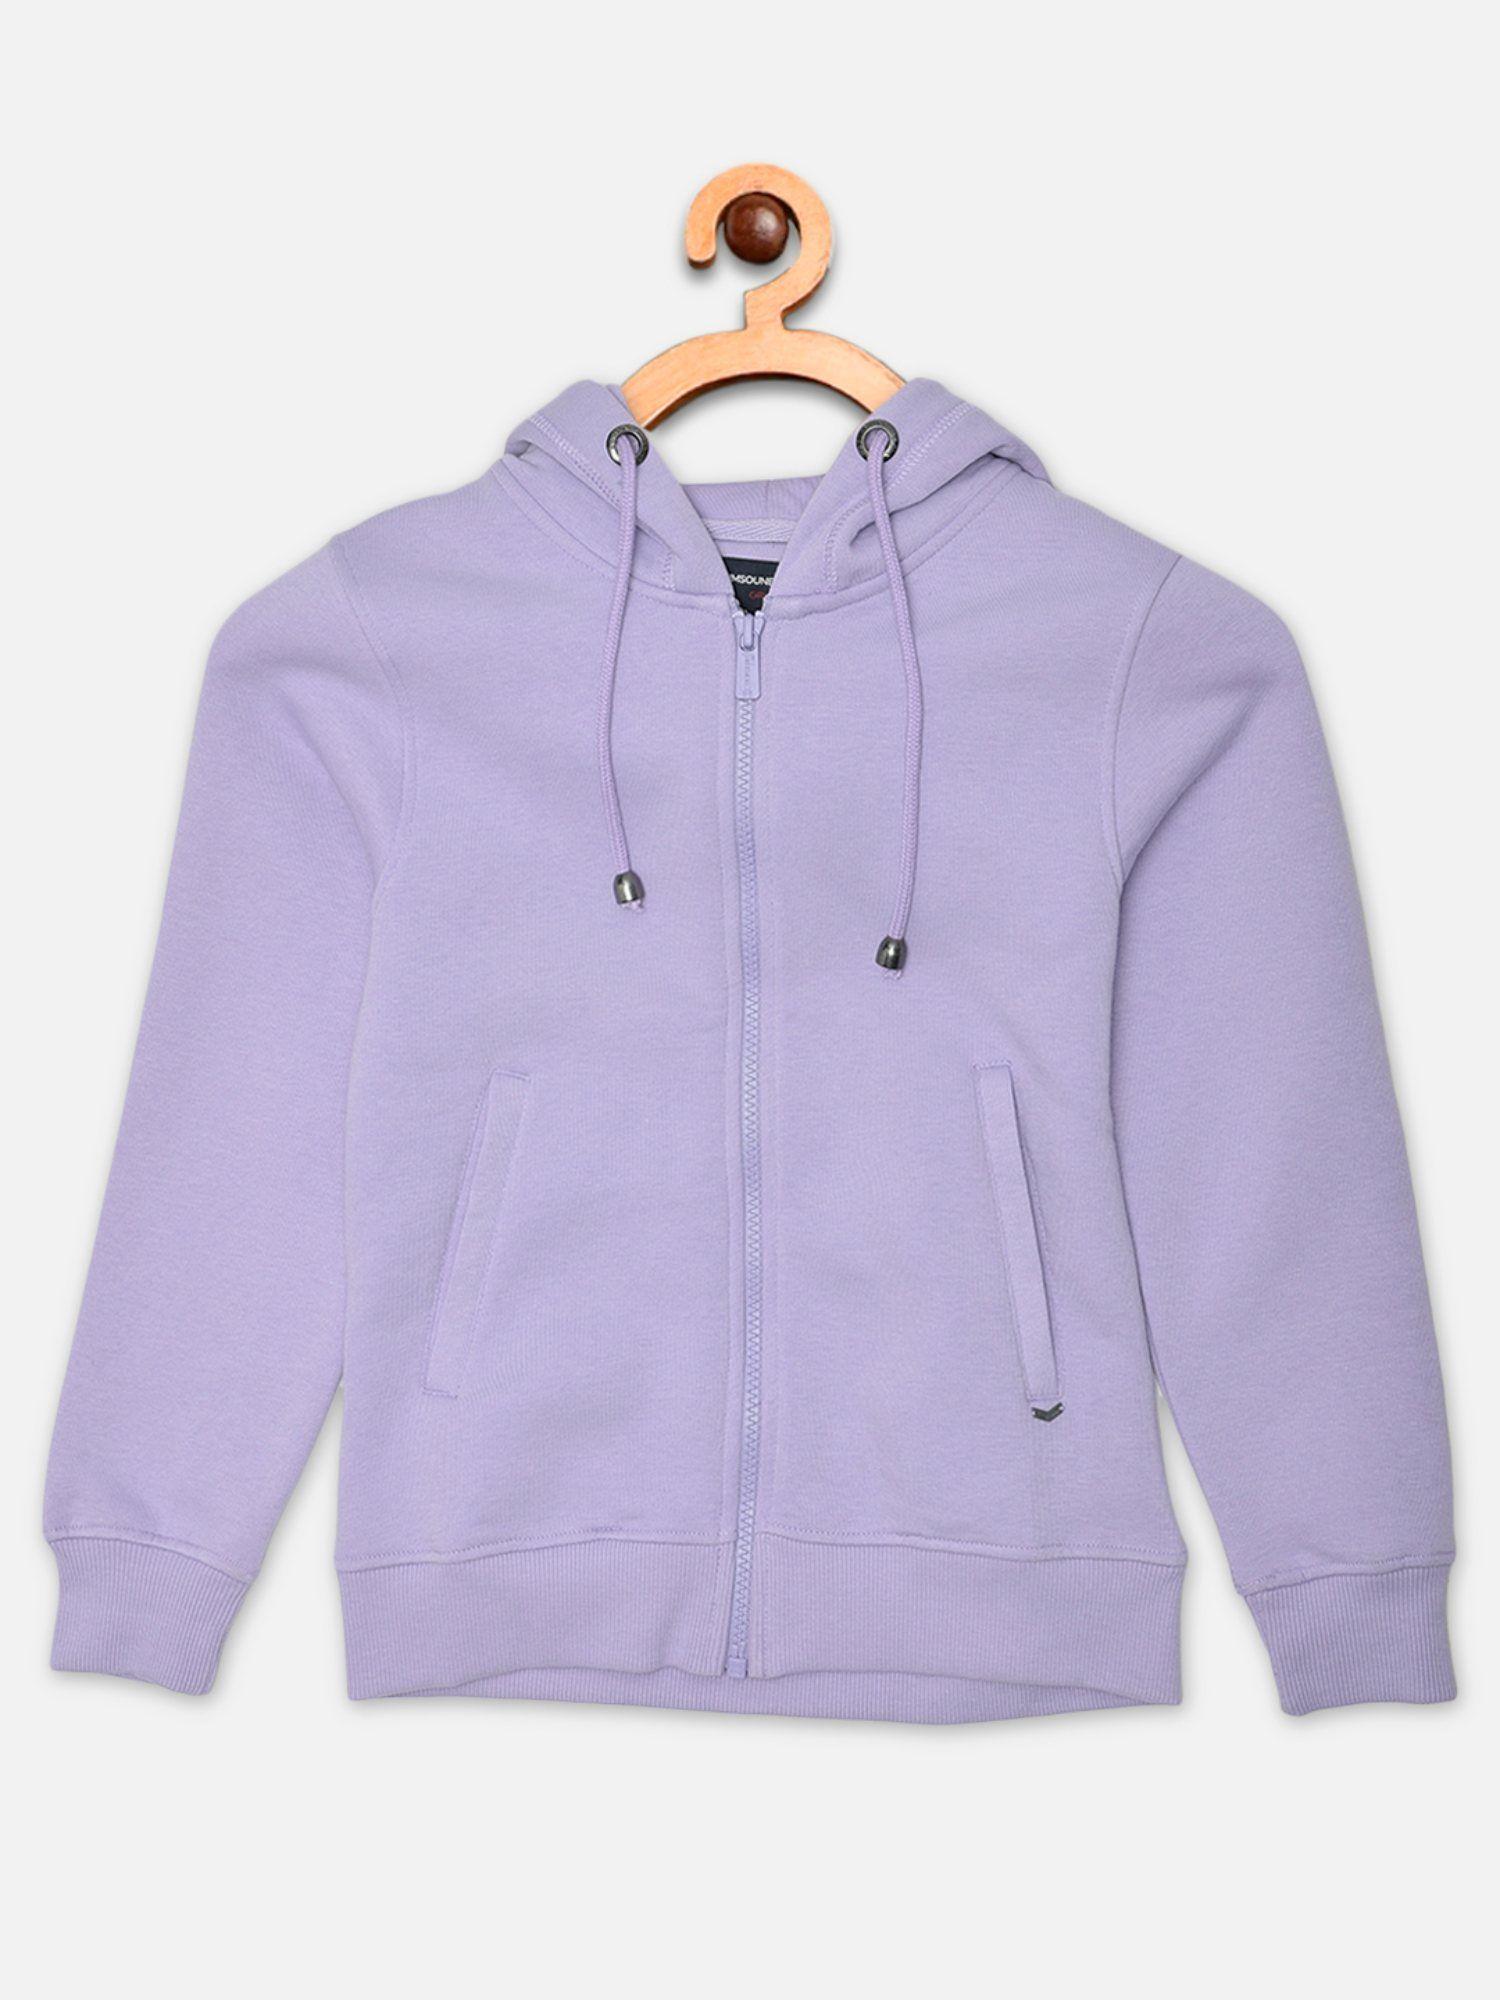 girls purple solid hooded sweatshirt